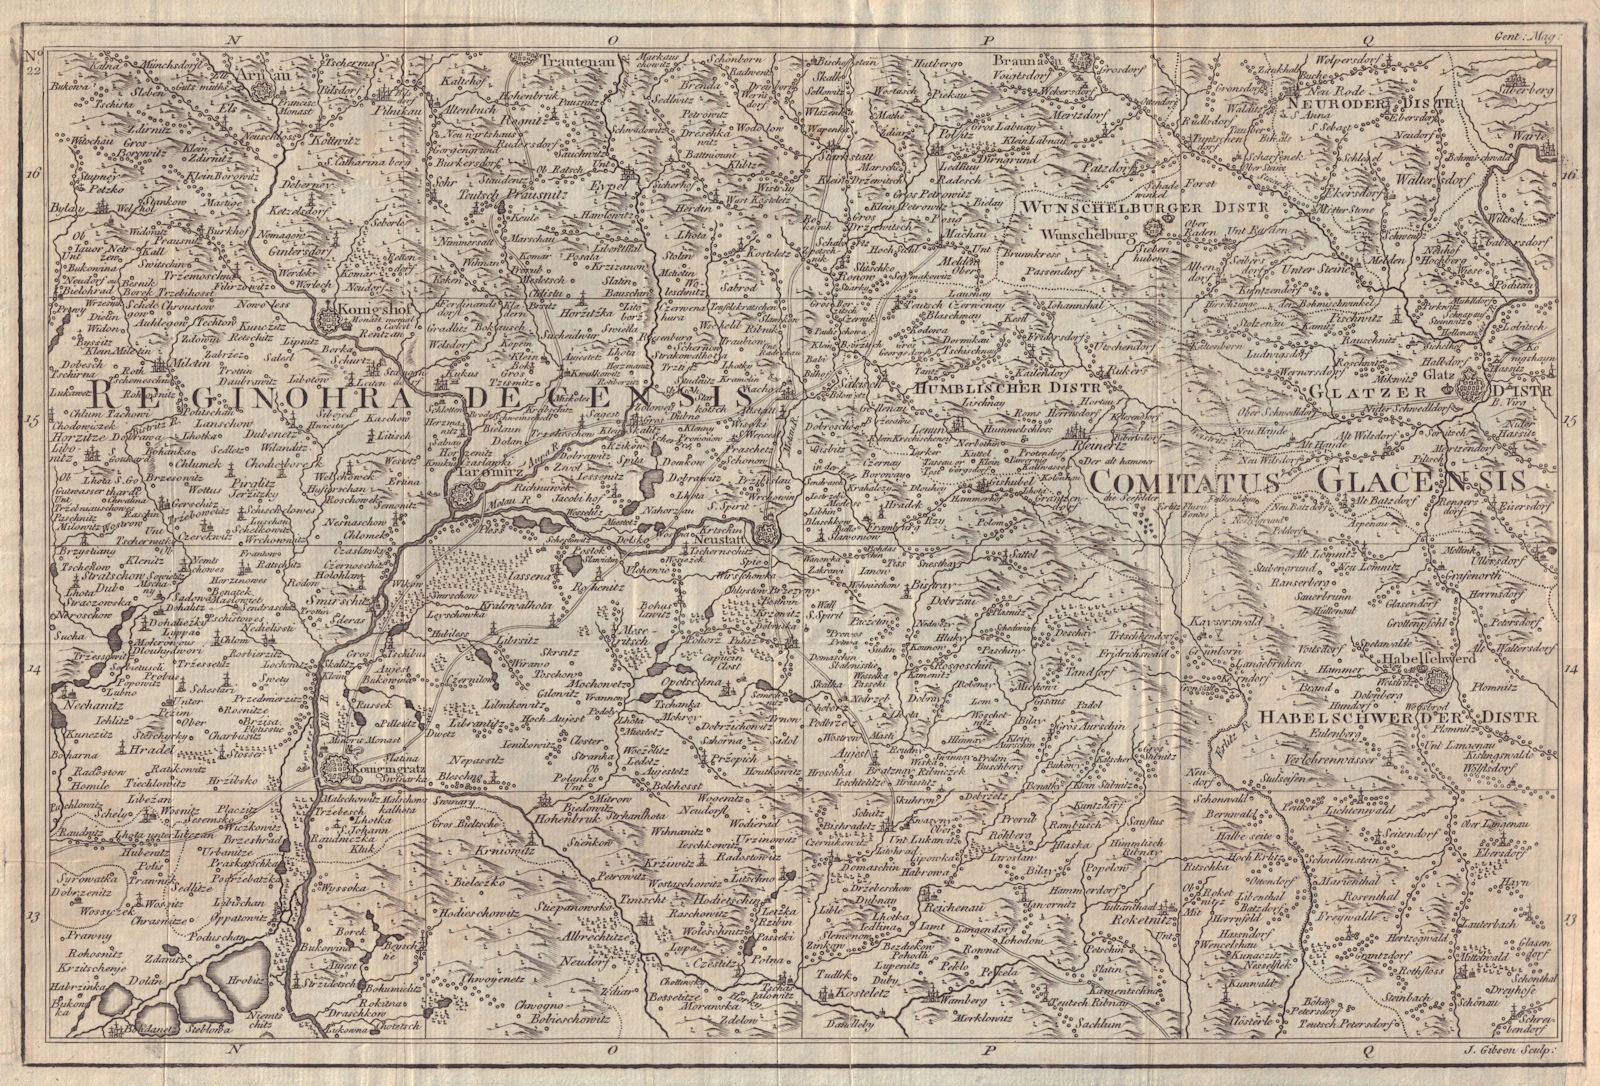 Czechia/Silesia. Hradec Kralove Jaromer Klodzko Nove Mesto. GIBSON 1762 map